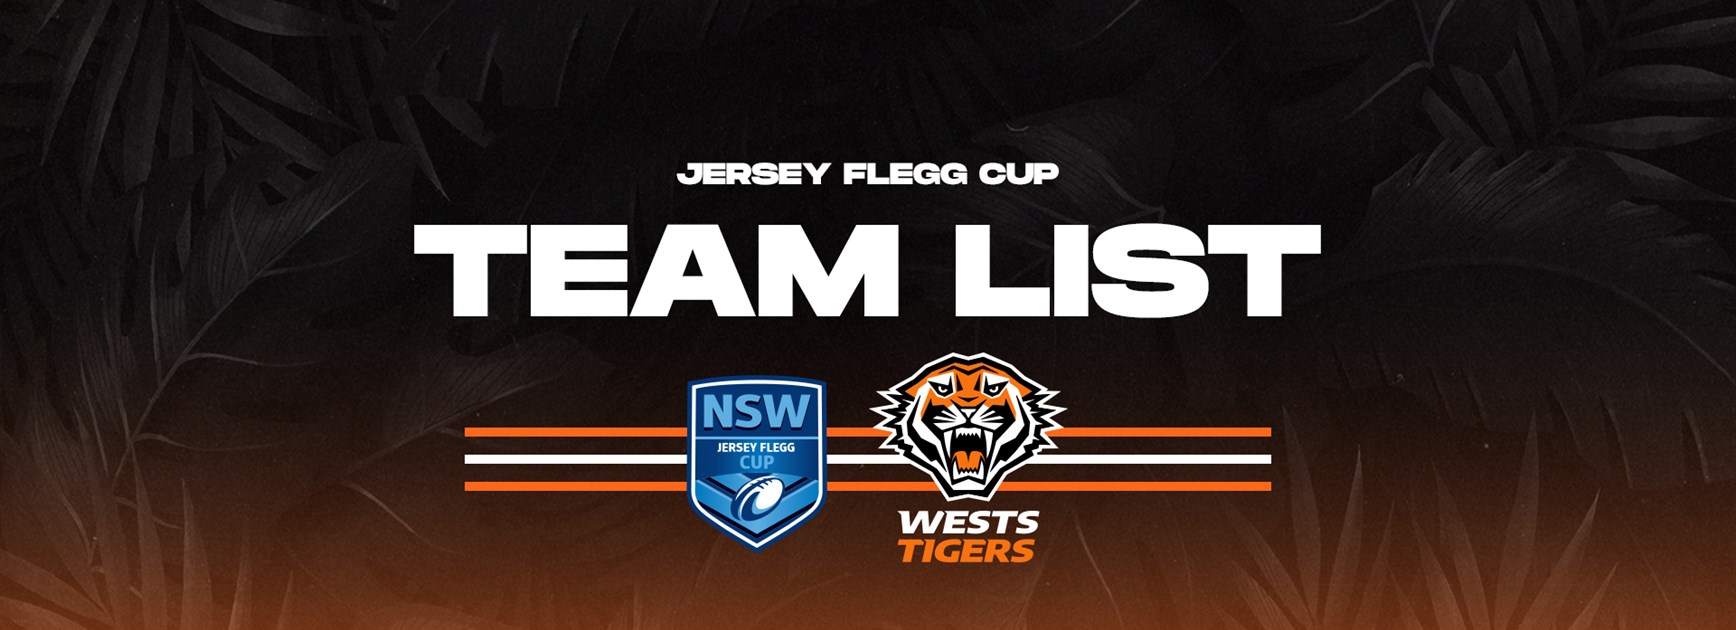 Team List: Jersey Flegg Cup Round 2 vs Knights